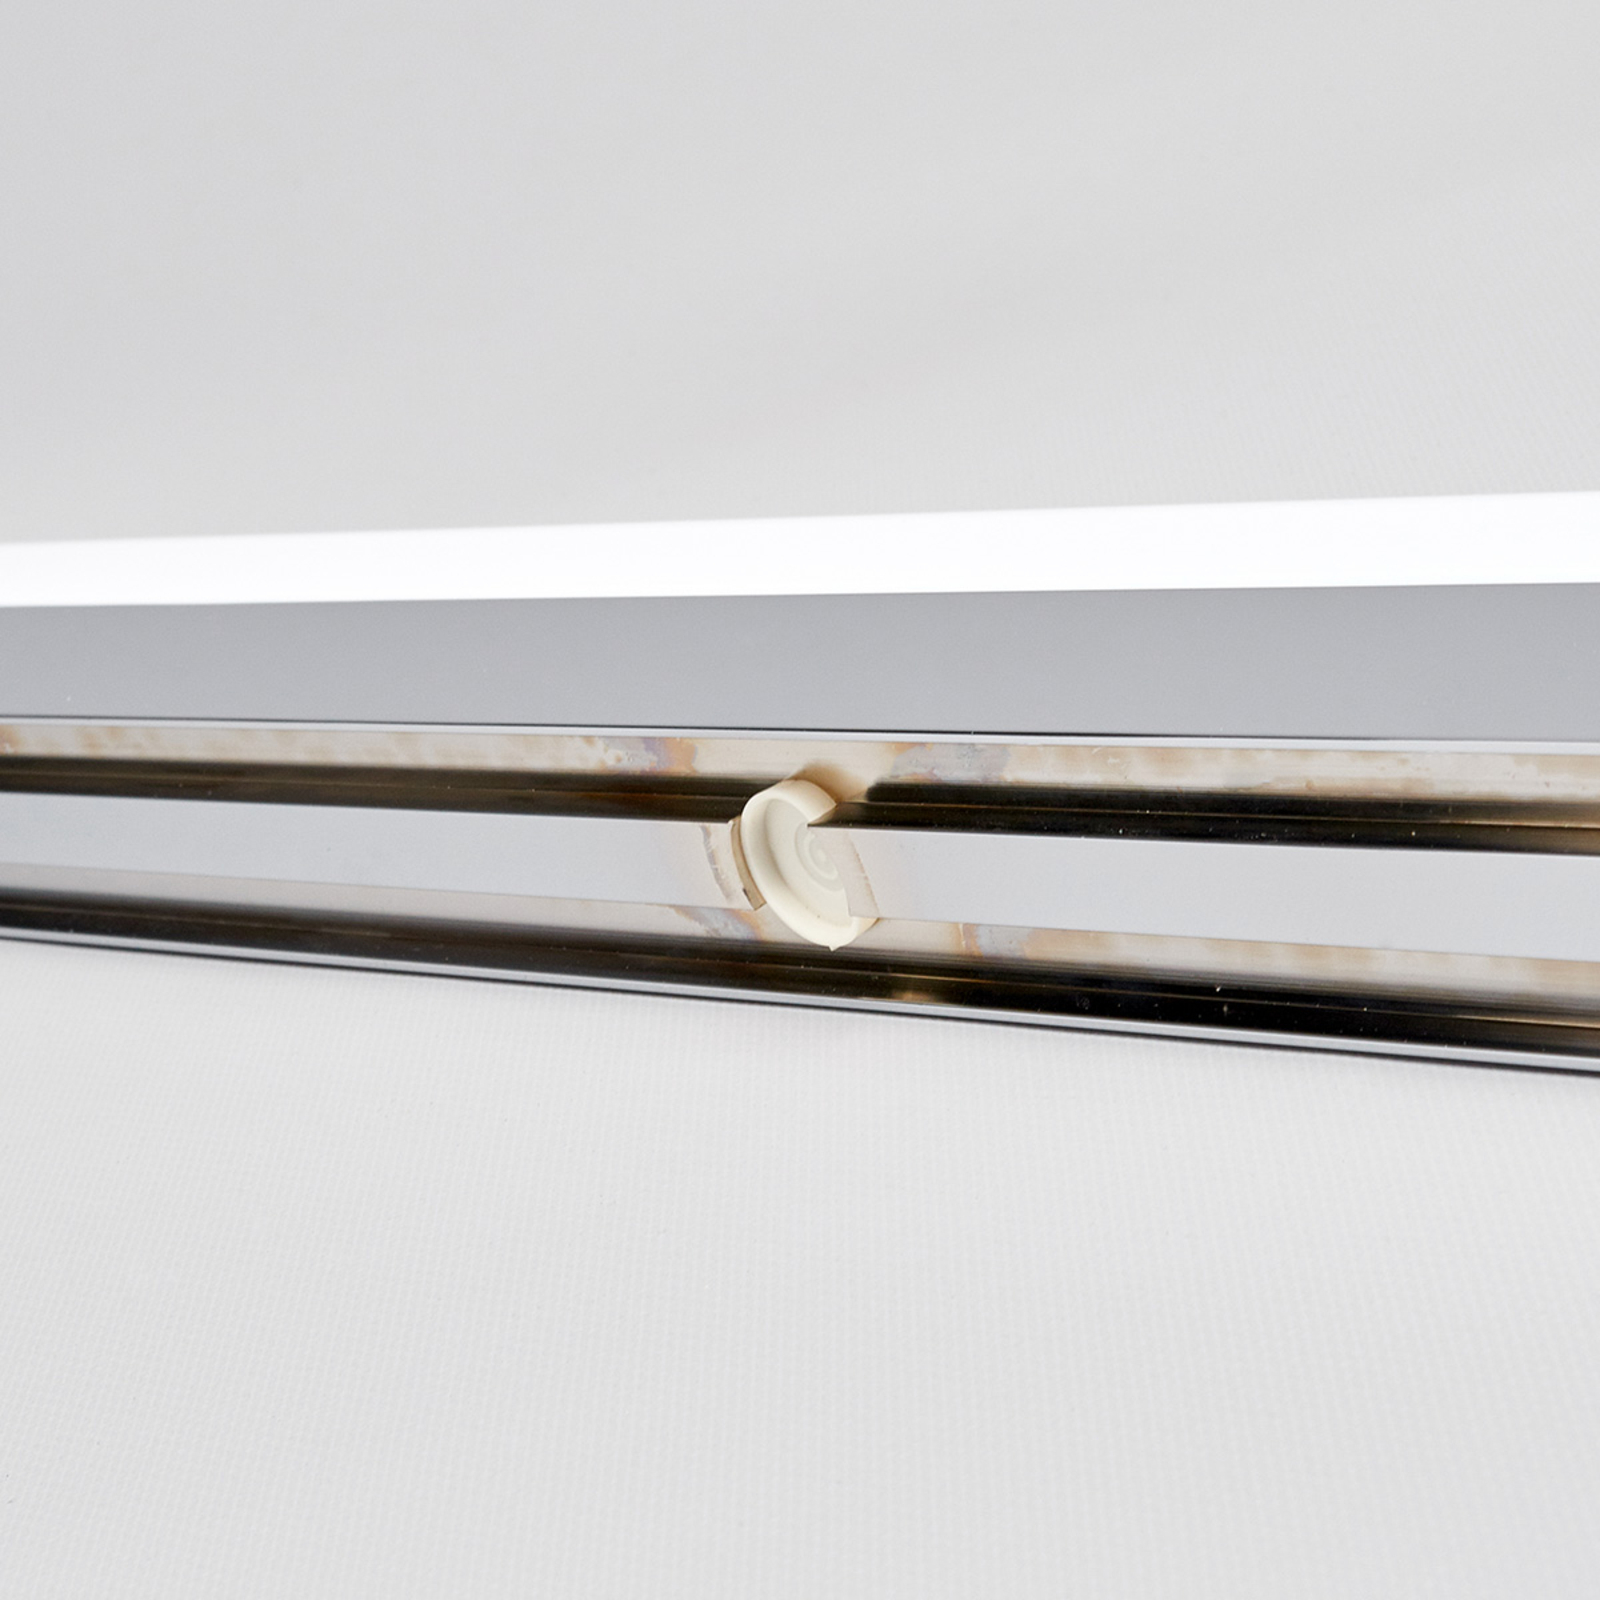 LED-badkamer-/spiegellamp Philippa halfrond 88 cm